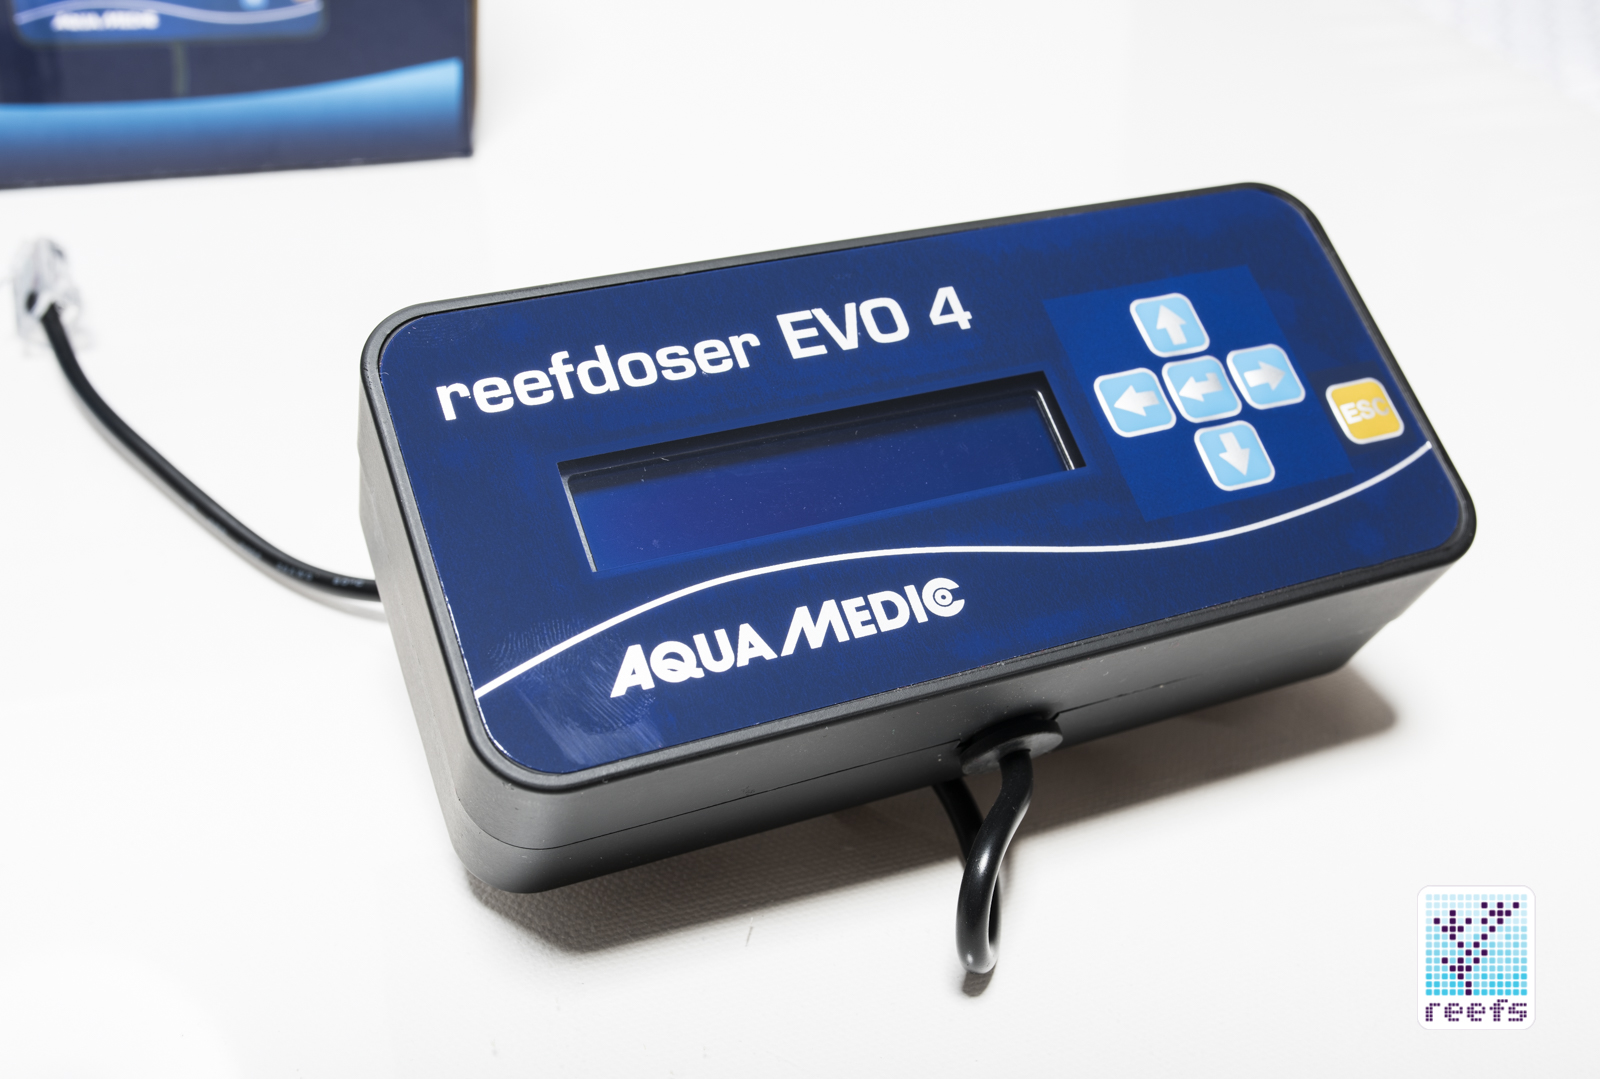 AQUA MEDIC reefdoser EVO 4 - 4-Kanal Dosierpumpe Aquarium + externem  Controller 